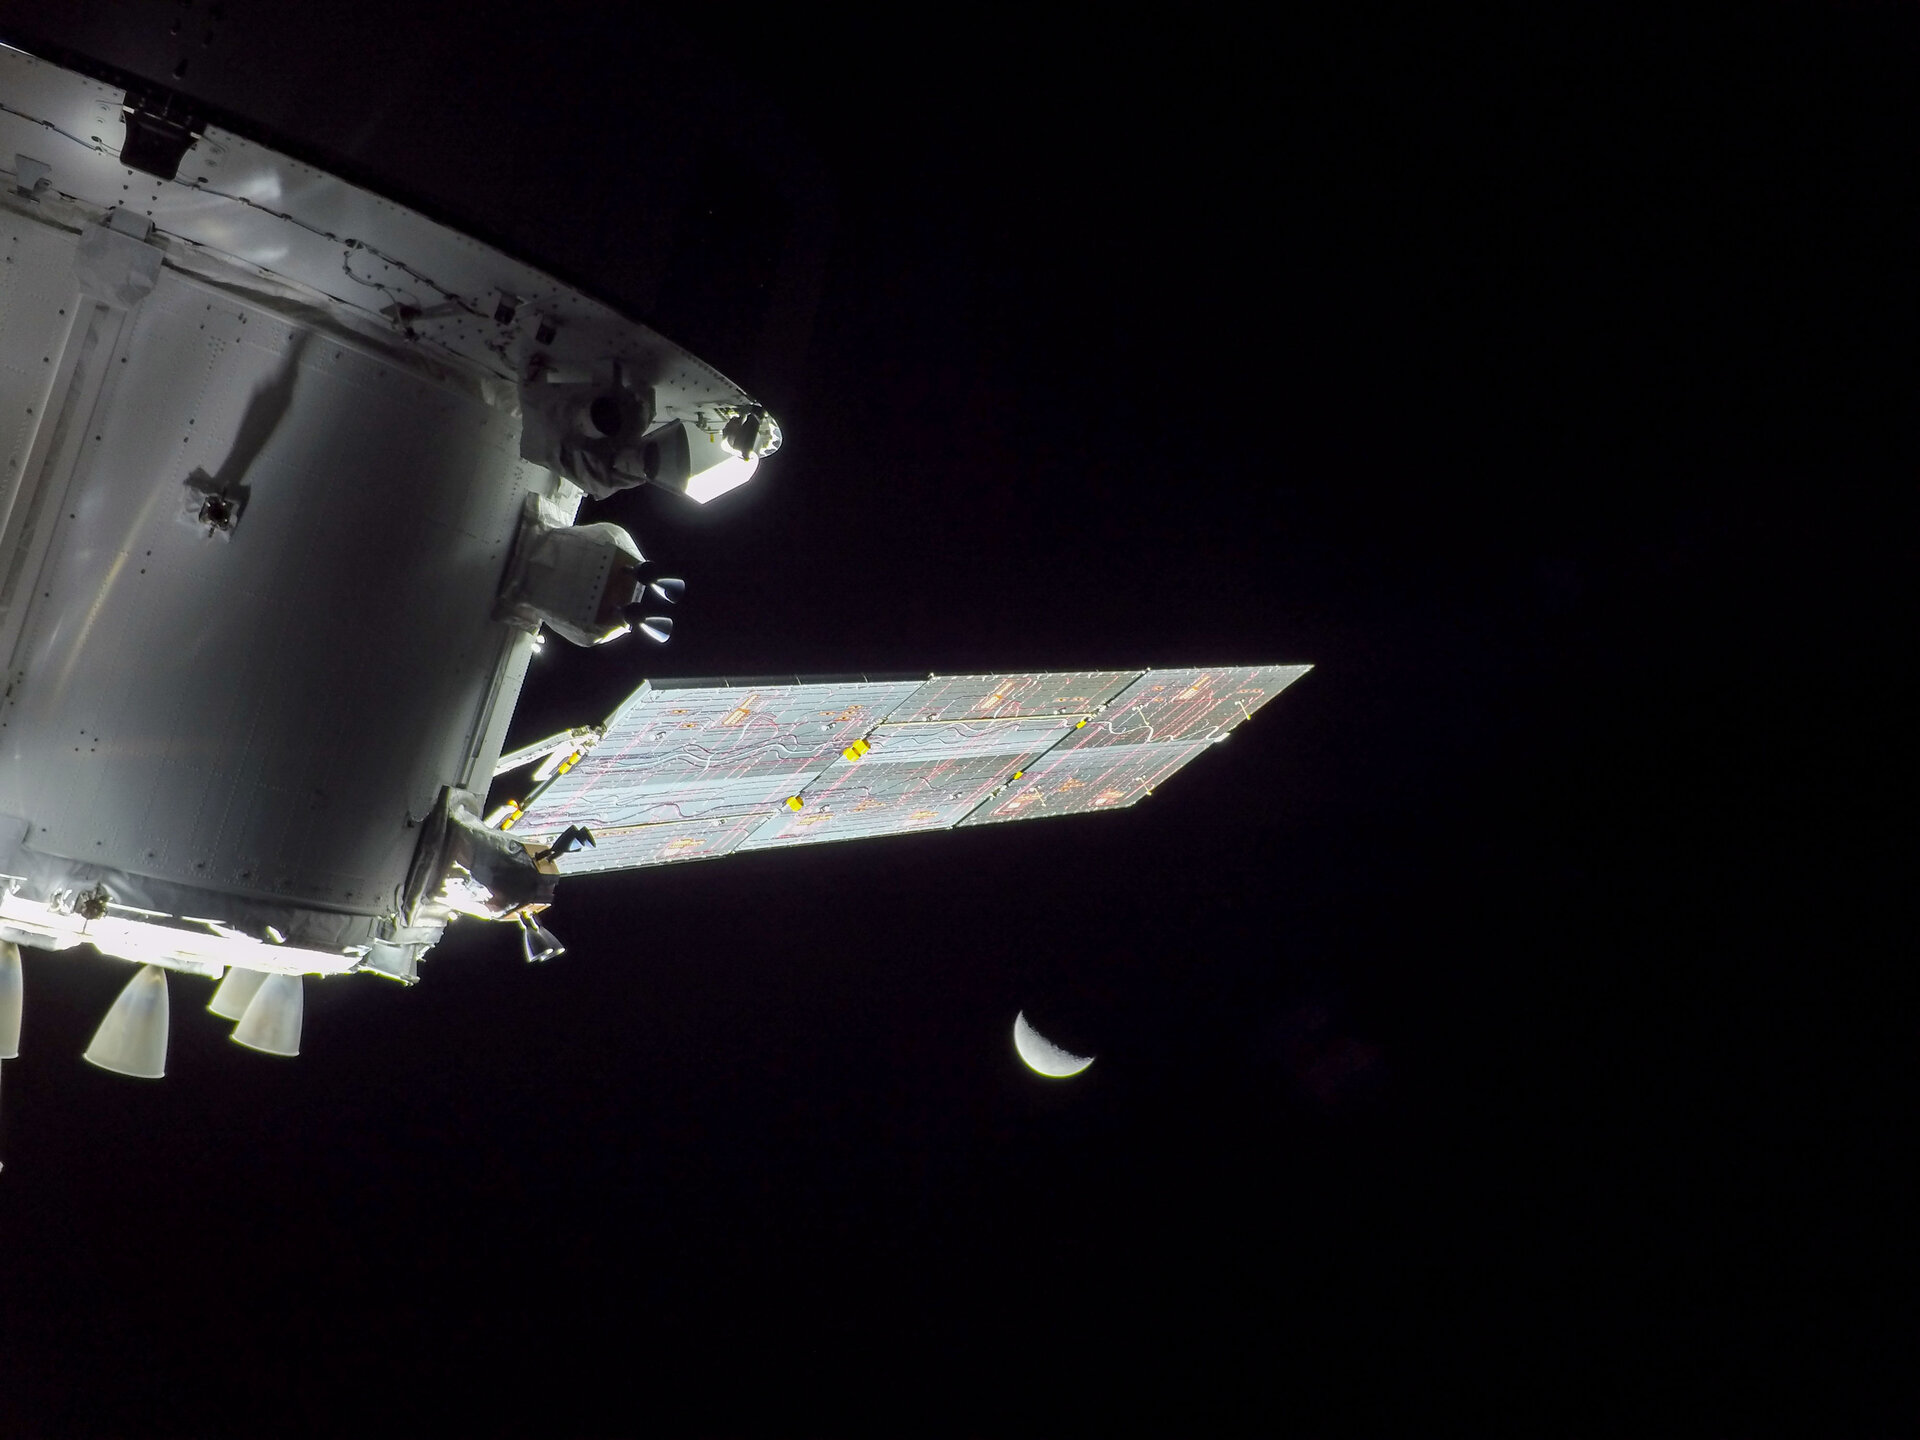 Orion spacecraft enters orbit around the moon